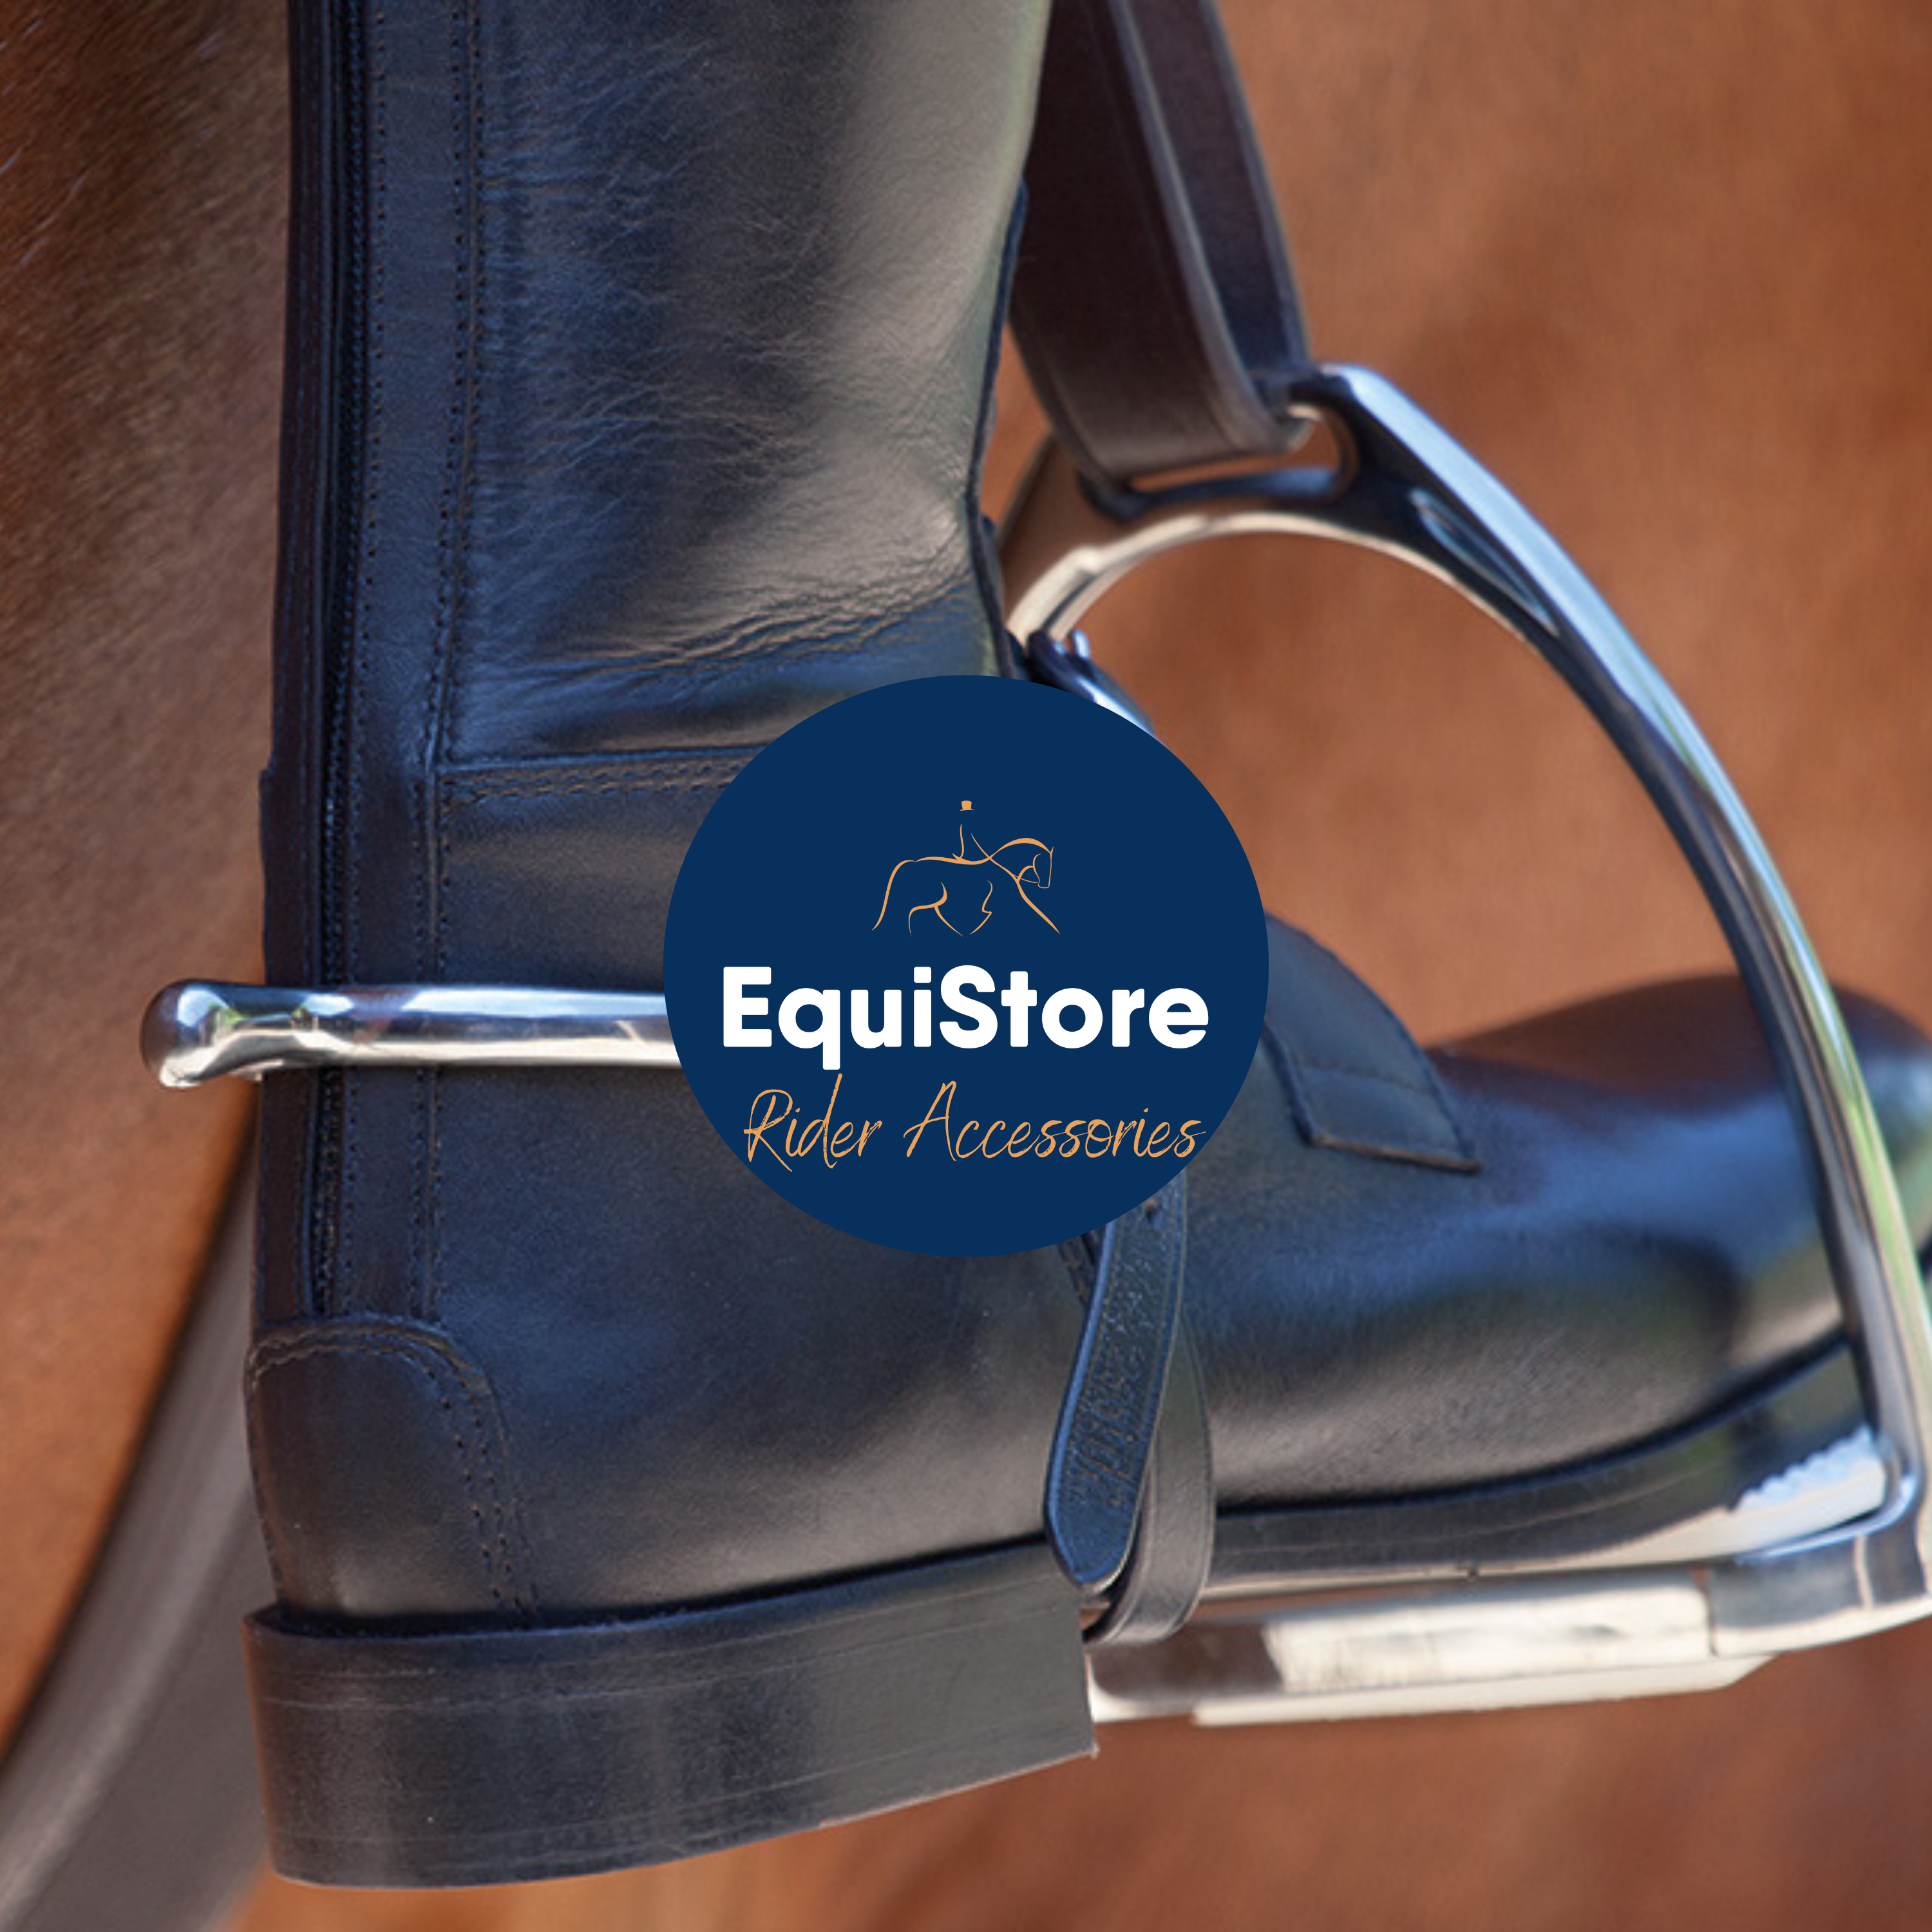 Horse rider accessories and equestrian essentials